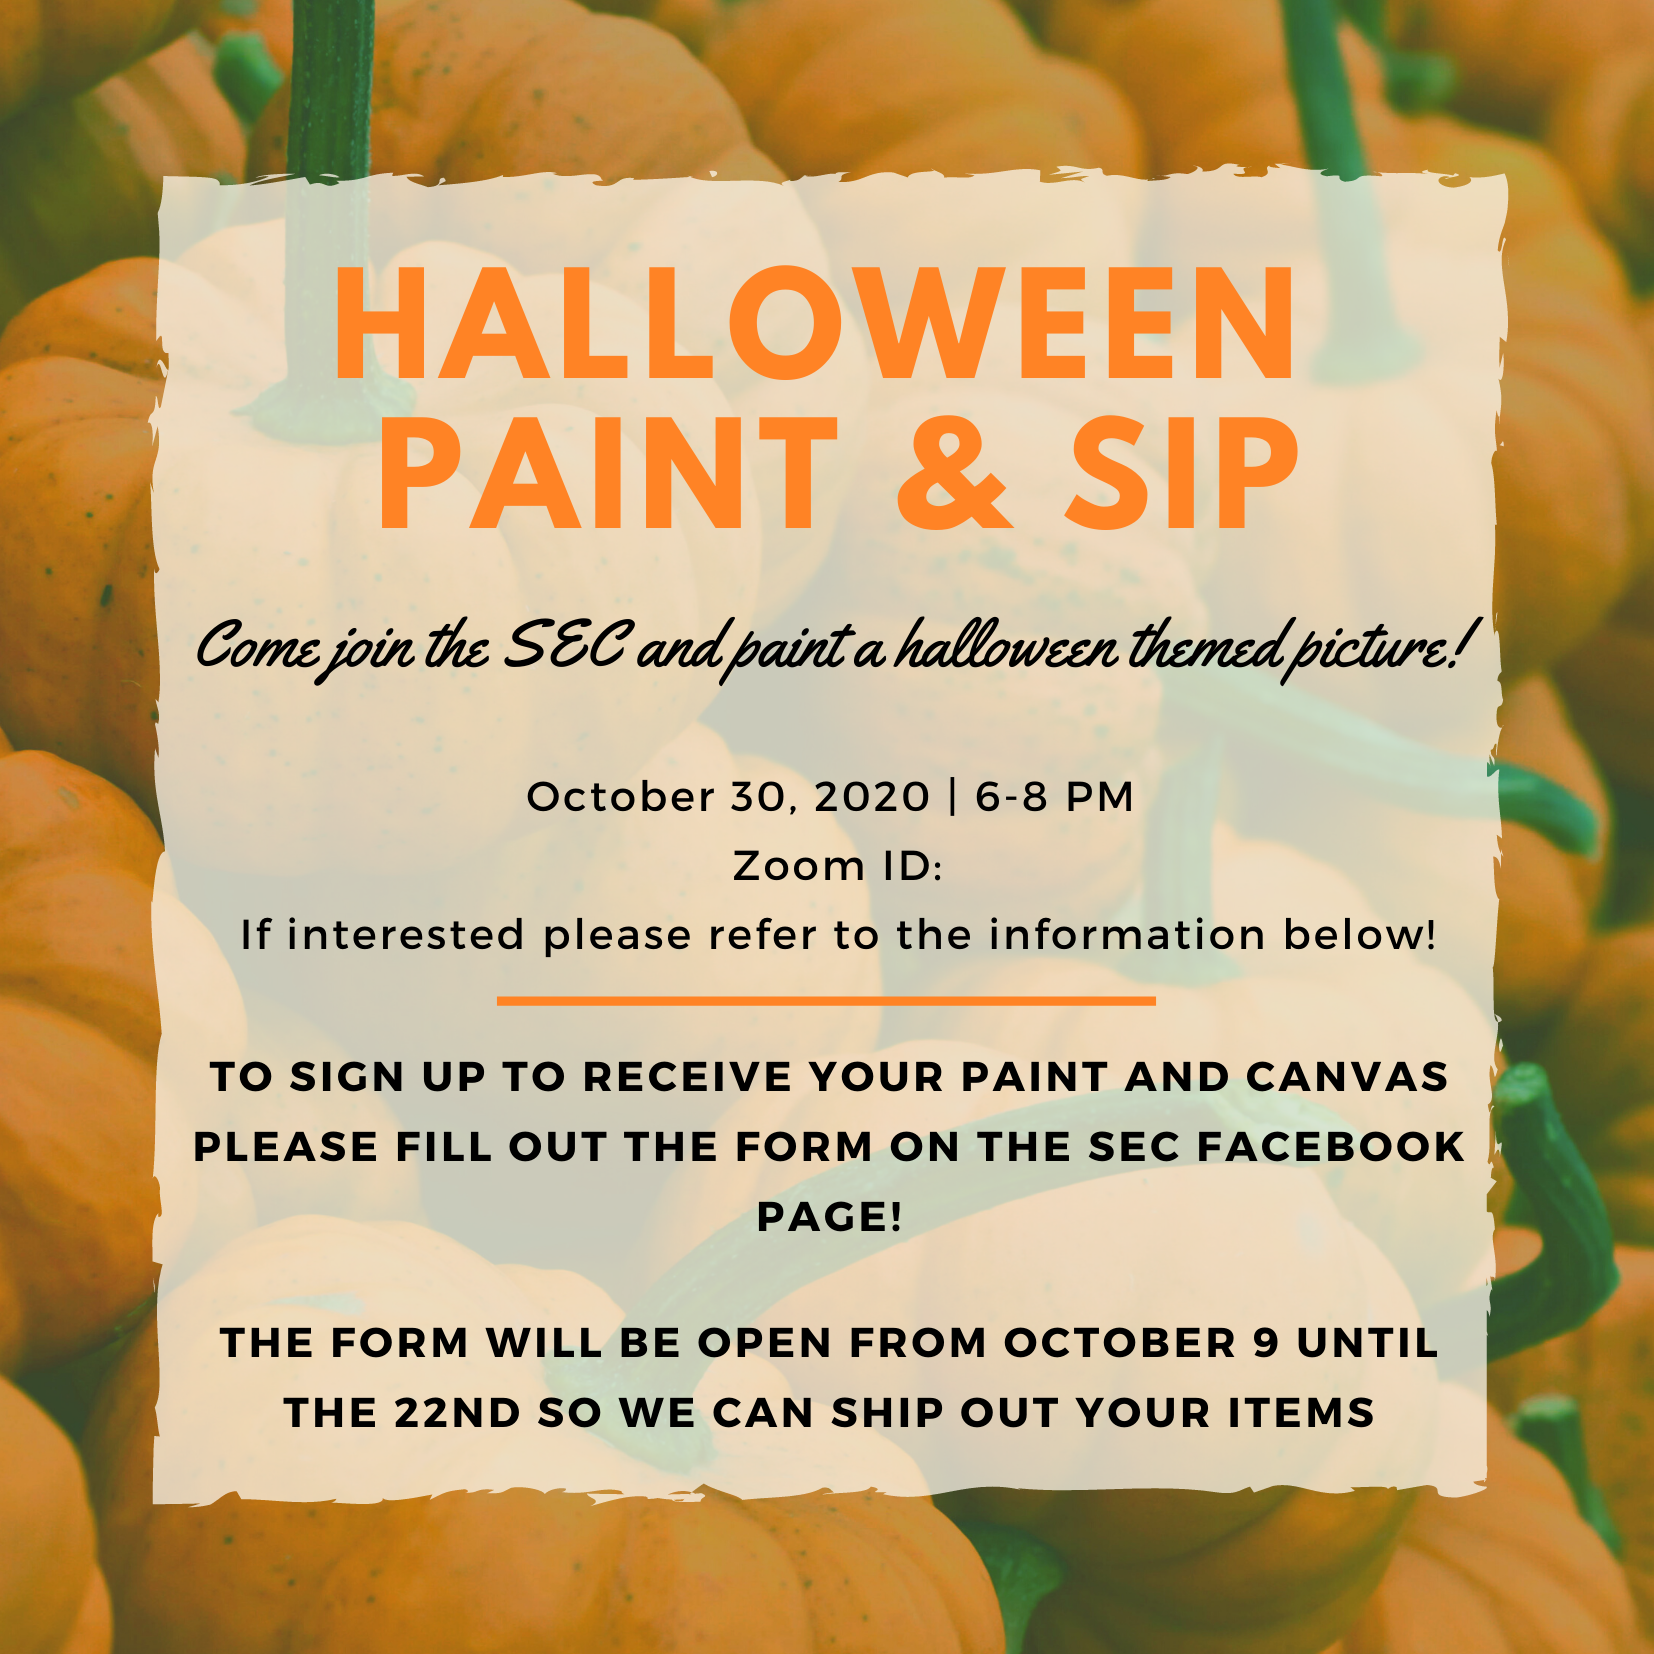  SEC: Halloween Paint and Sip flyer